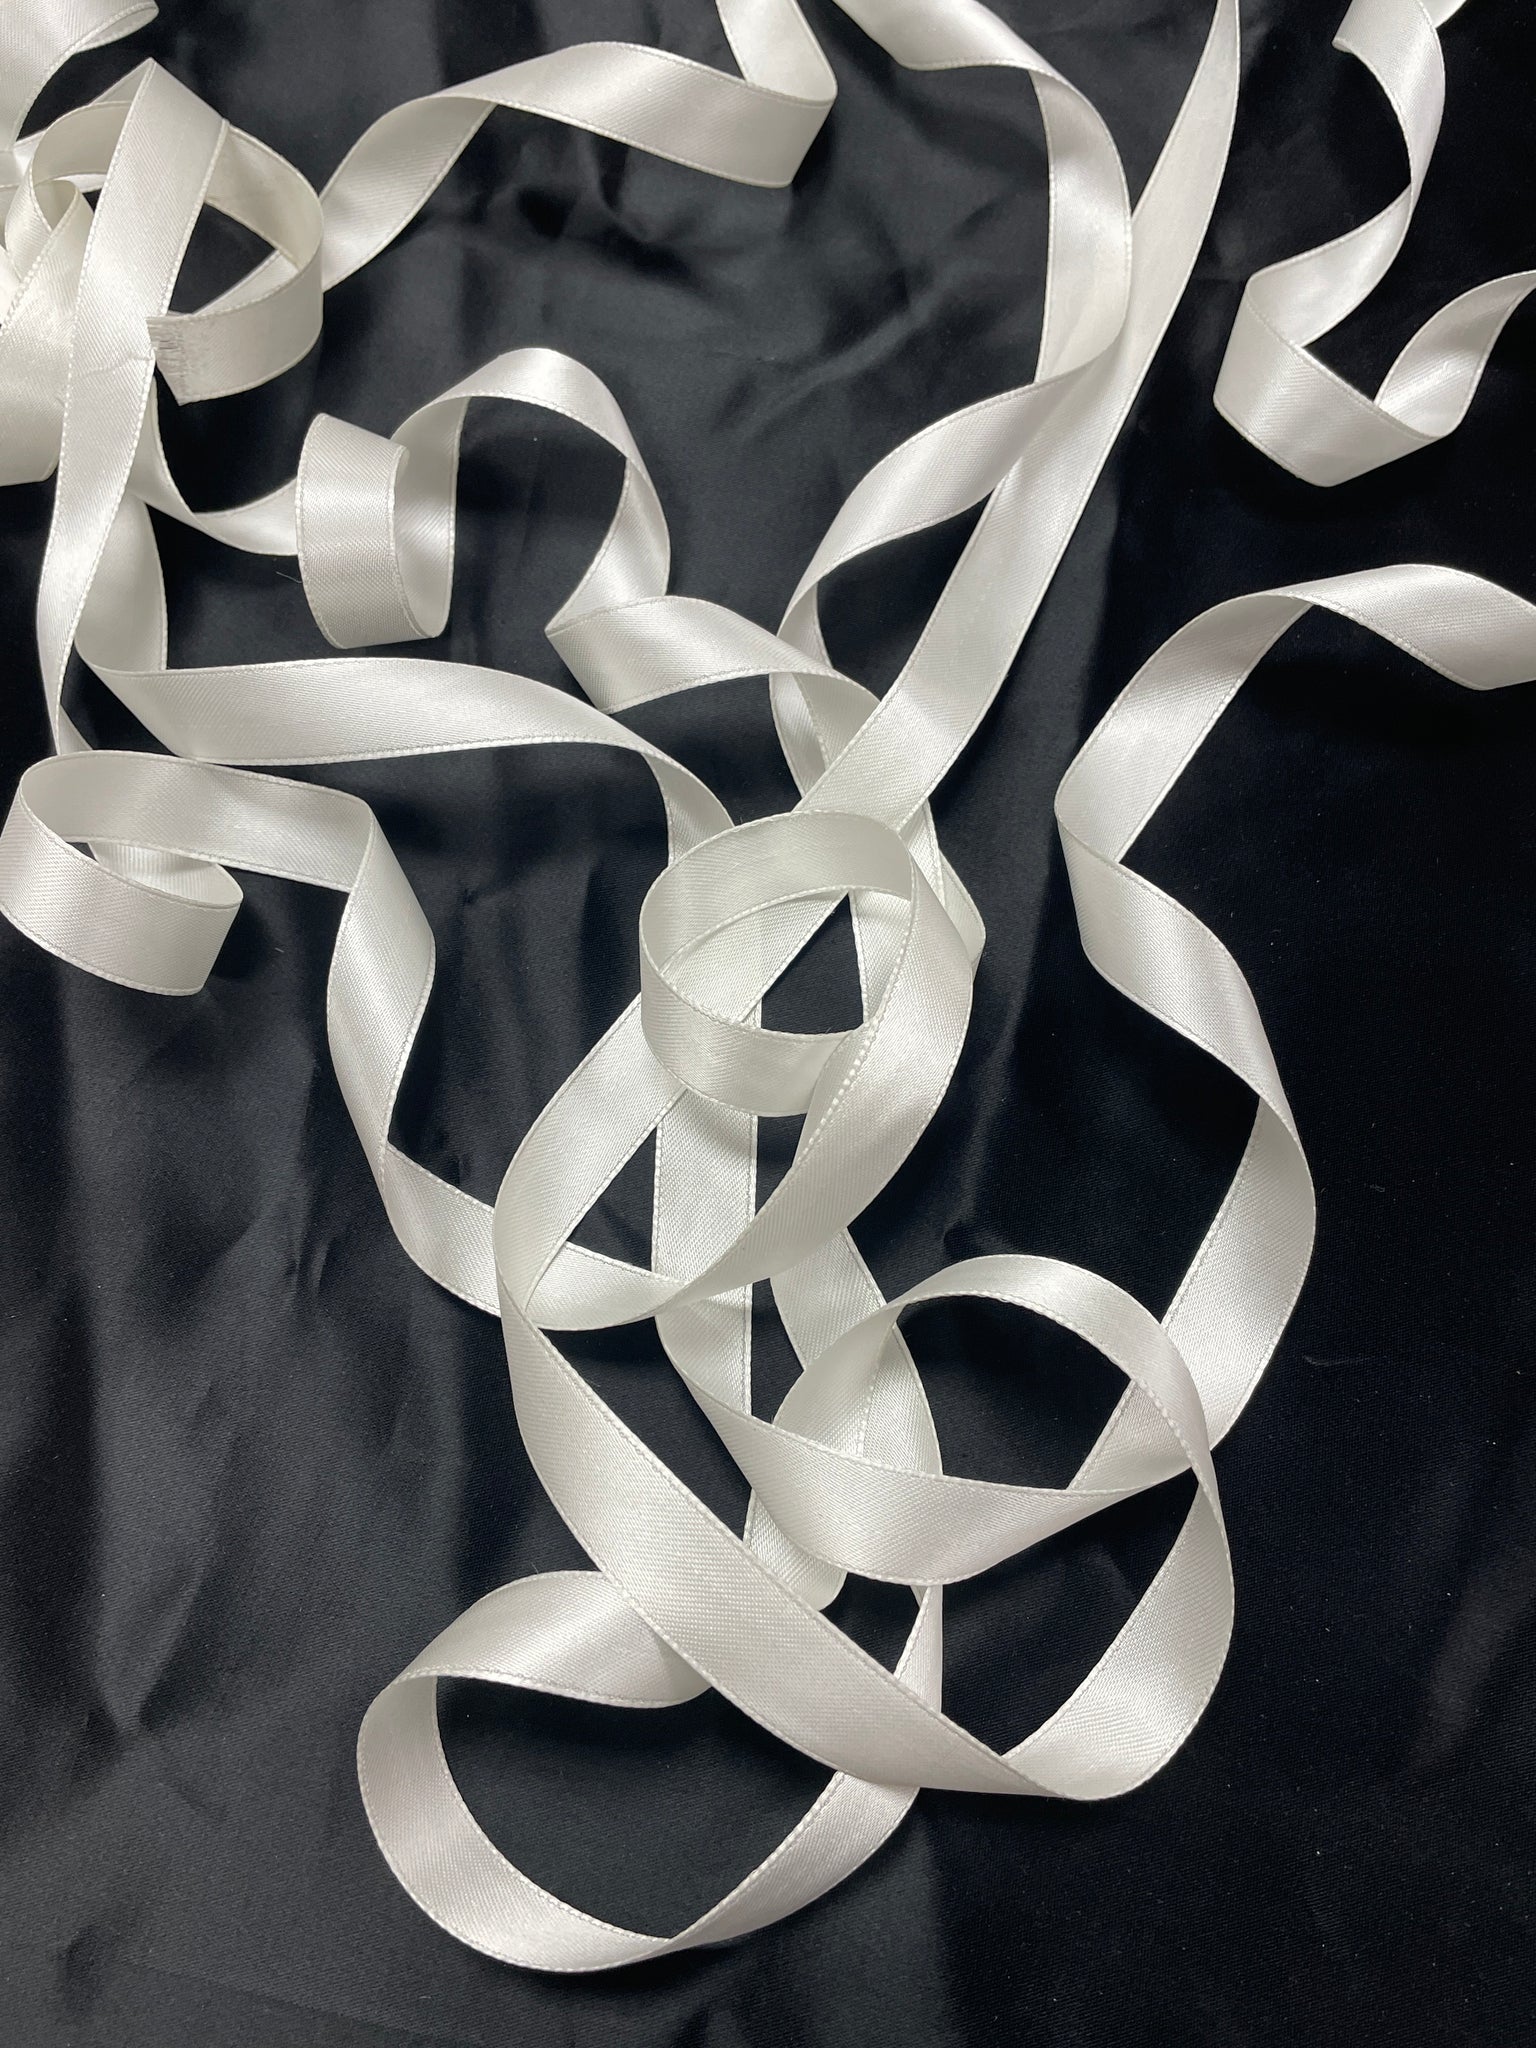 7 YD Polyester Double Satin Ribbon - White